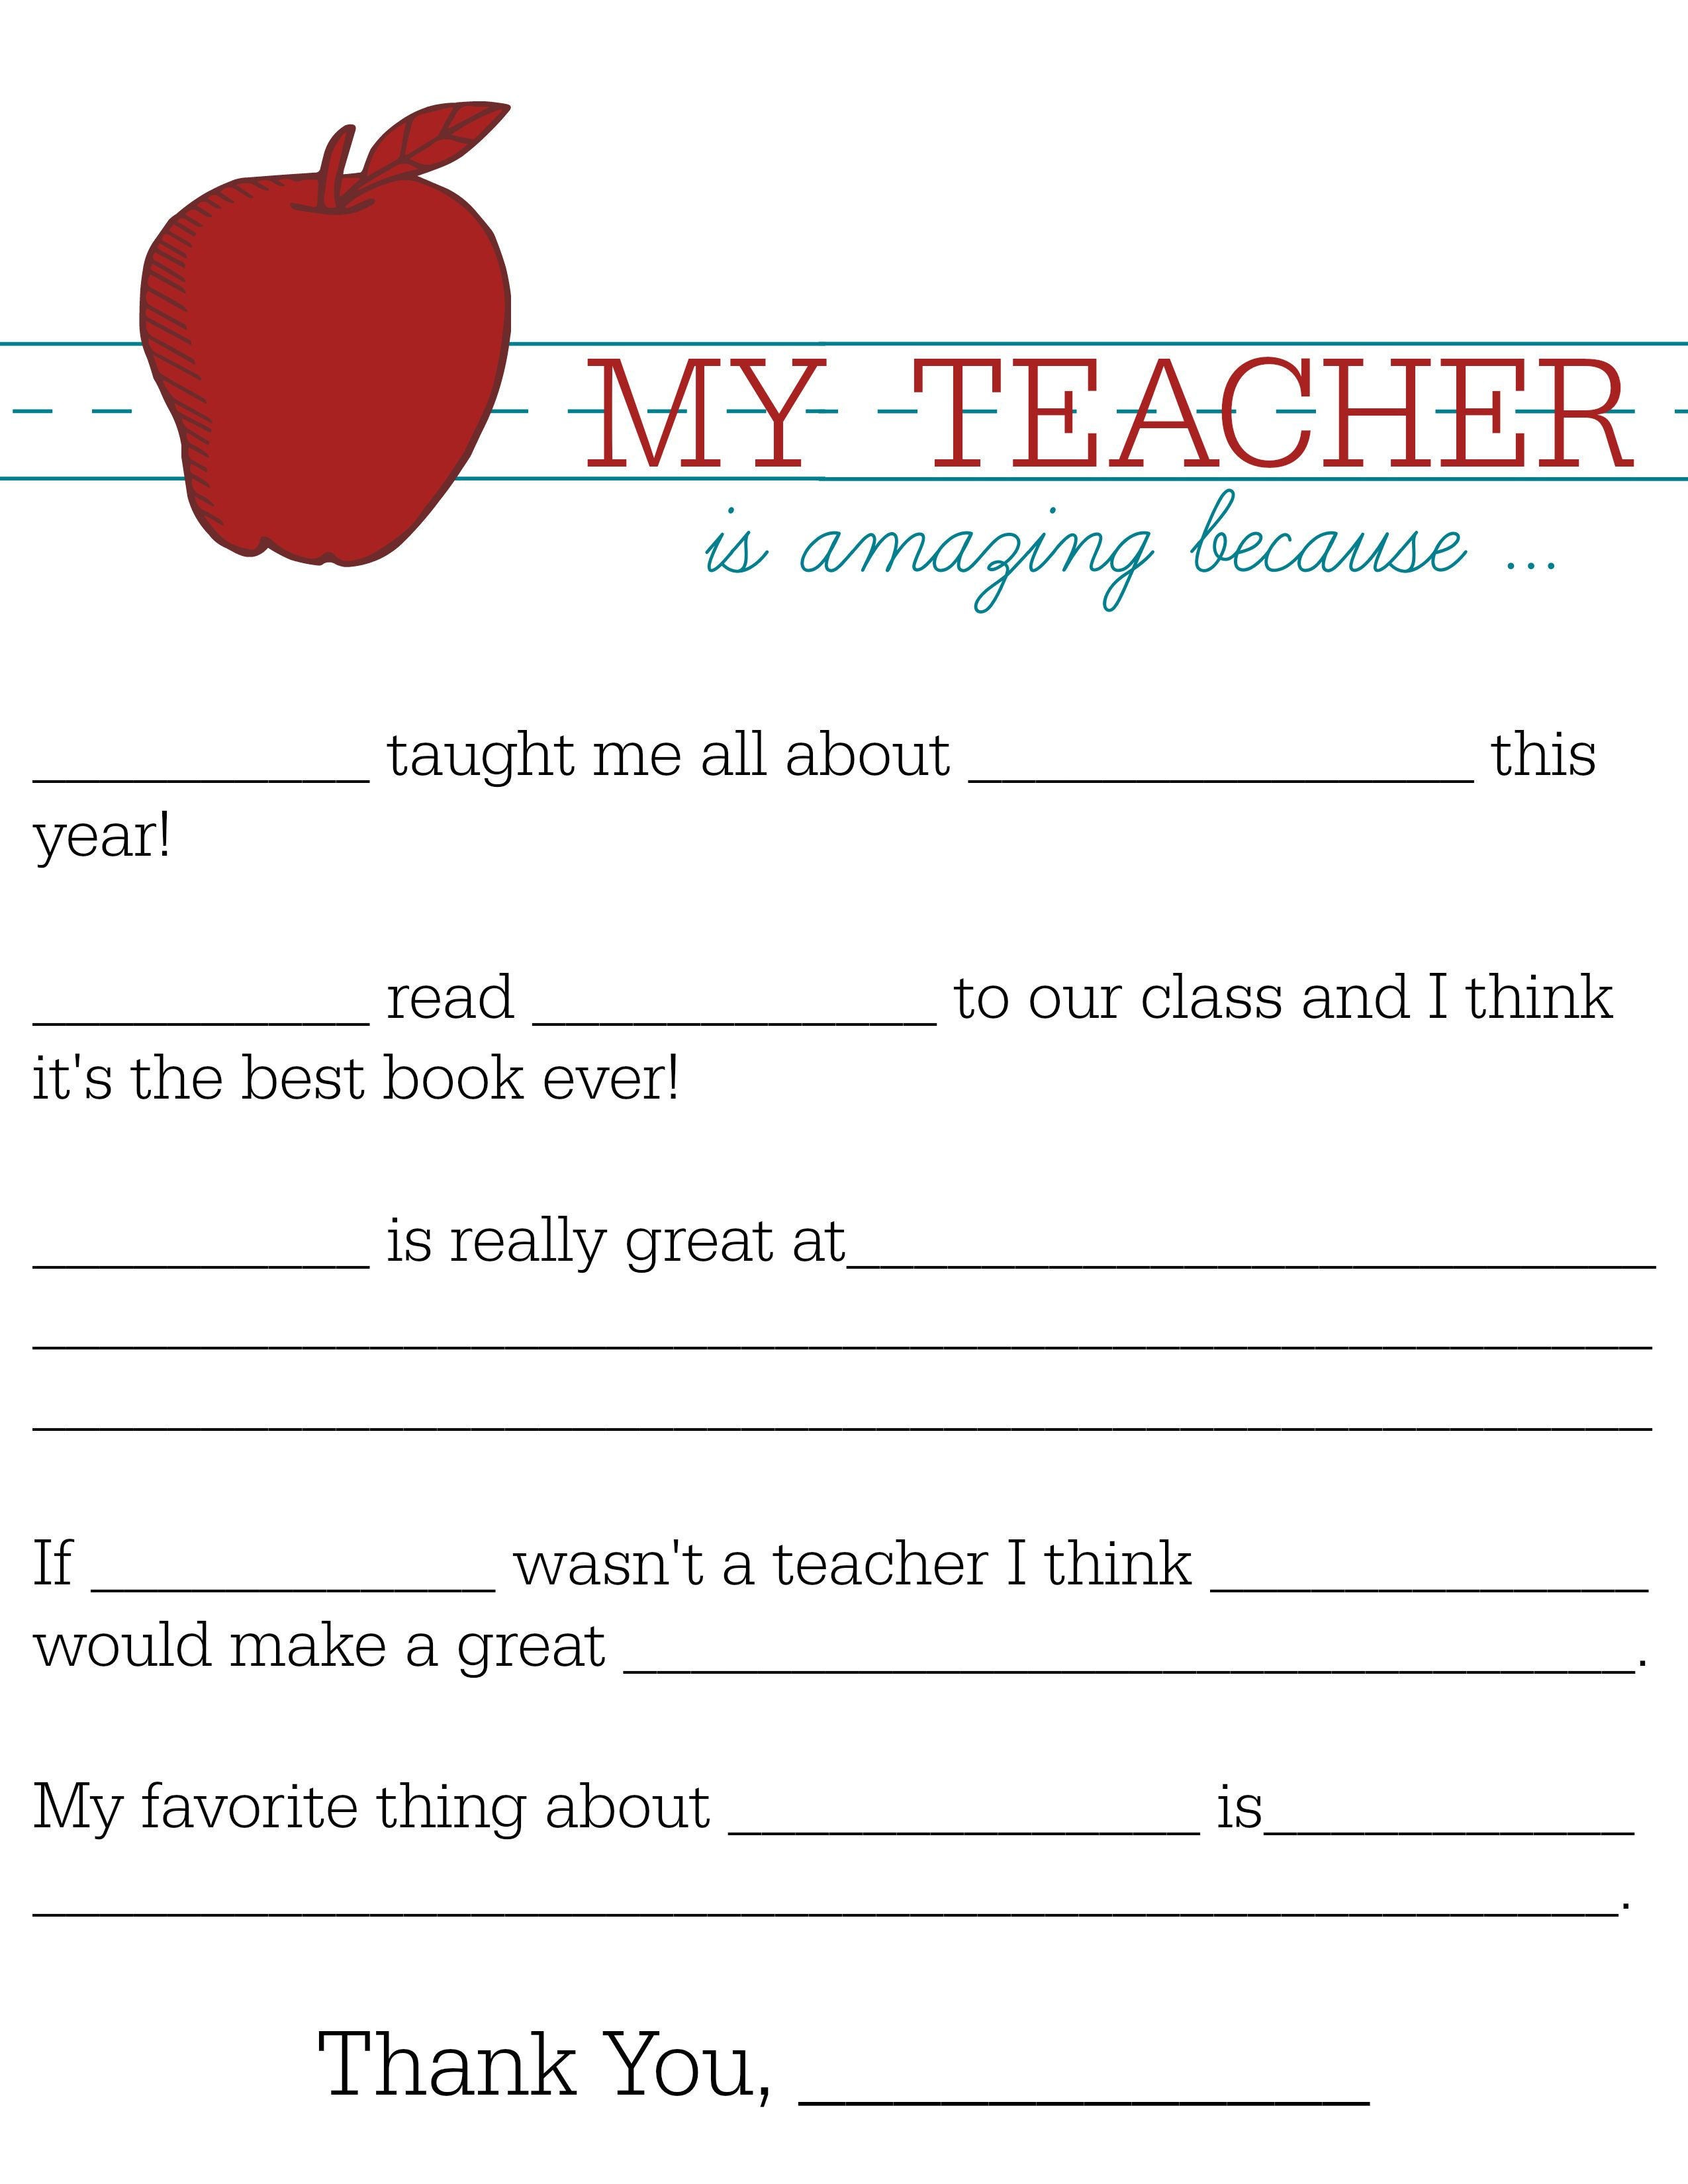 All About My Teacher | Parents: Raise A Reader Blog | Pinterest - Free Printable Teacher Notes To Parents